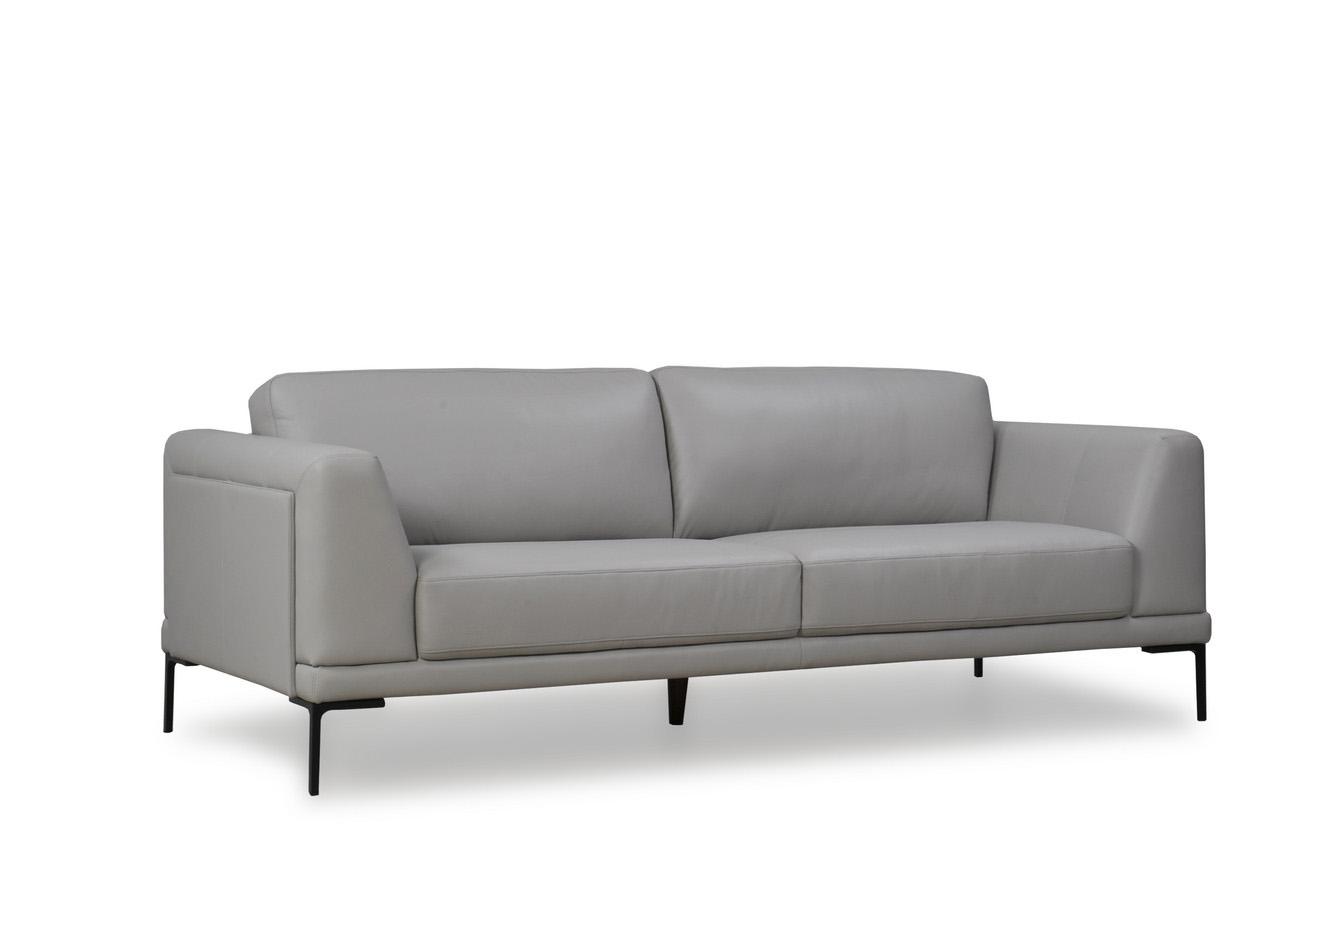 Modern Sofa 578 - Kerman 57803B1192 in Light Gray Top grain leather